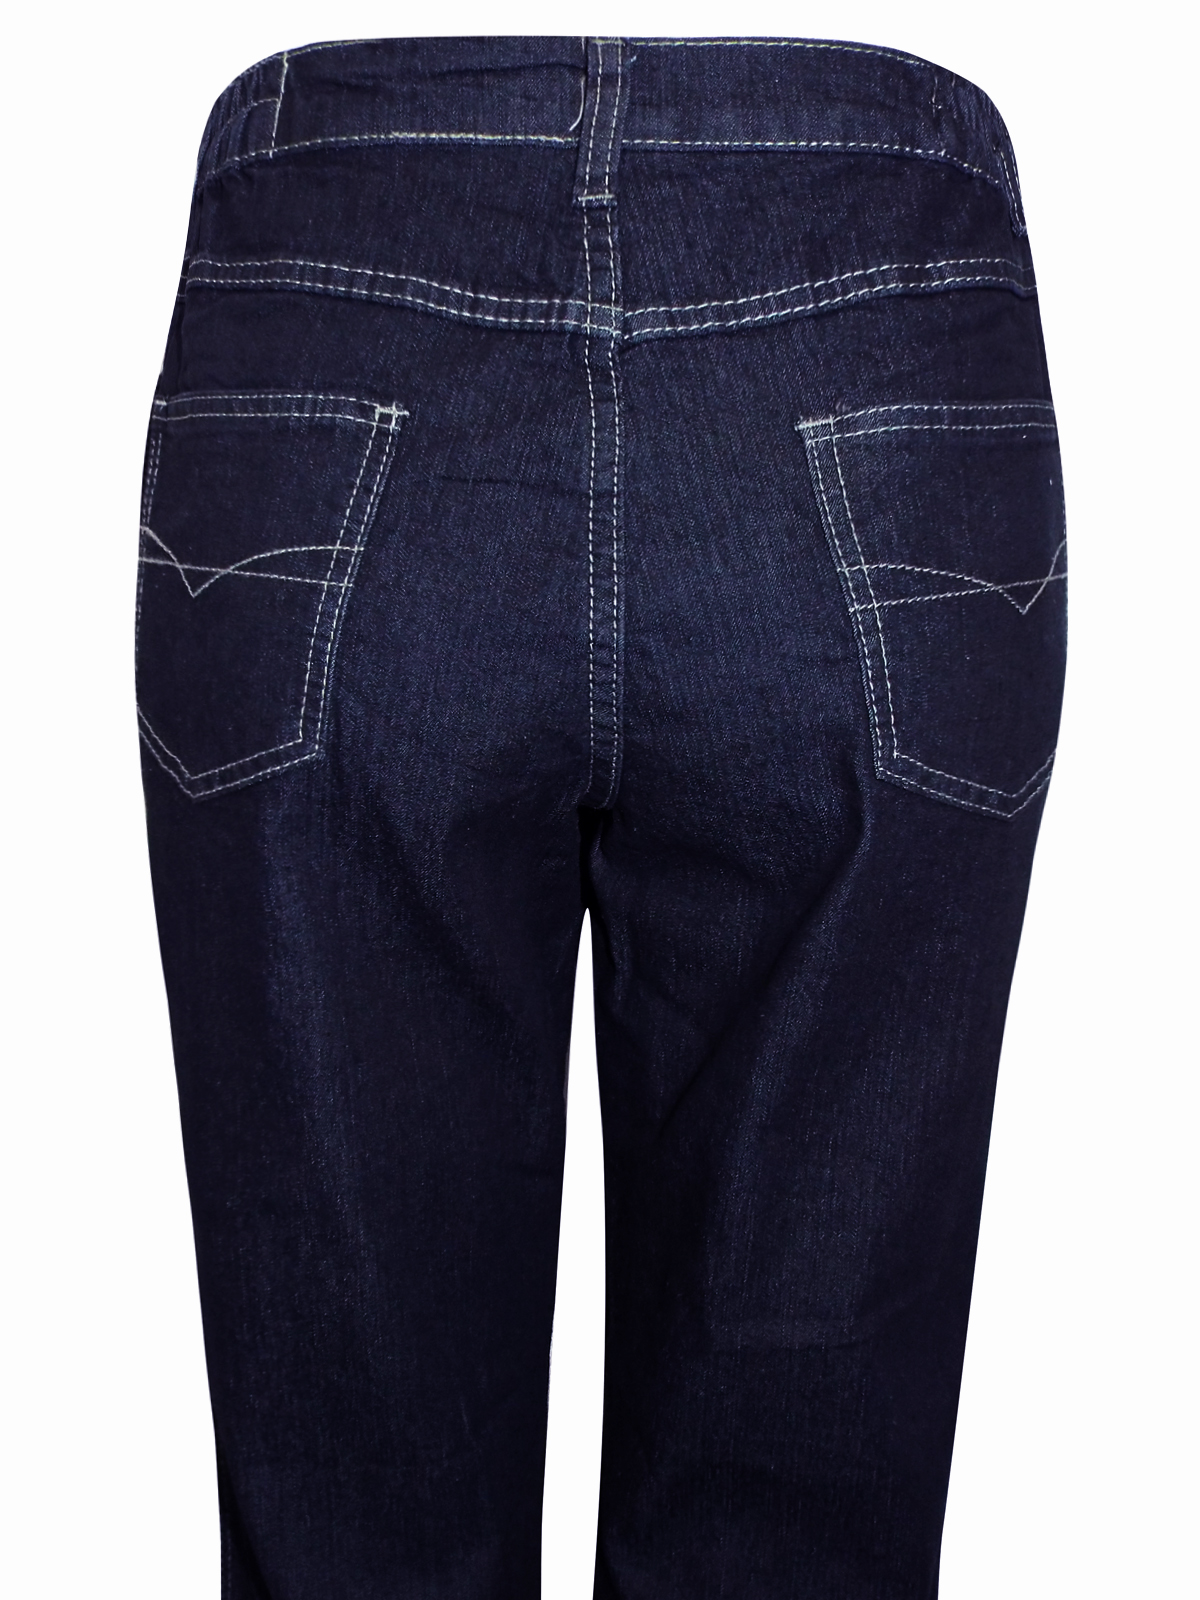 Gill - - Gill Jeans INDIGO Cotton Rich 5-Pocket Straight Fit Denim ...